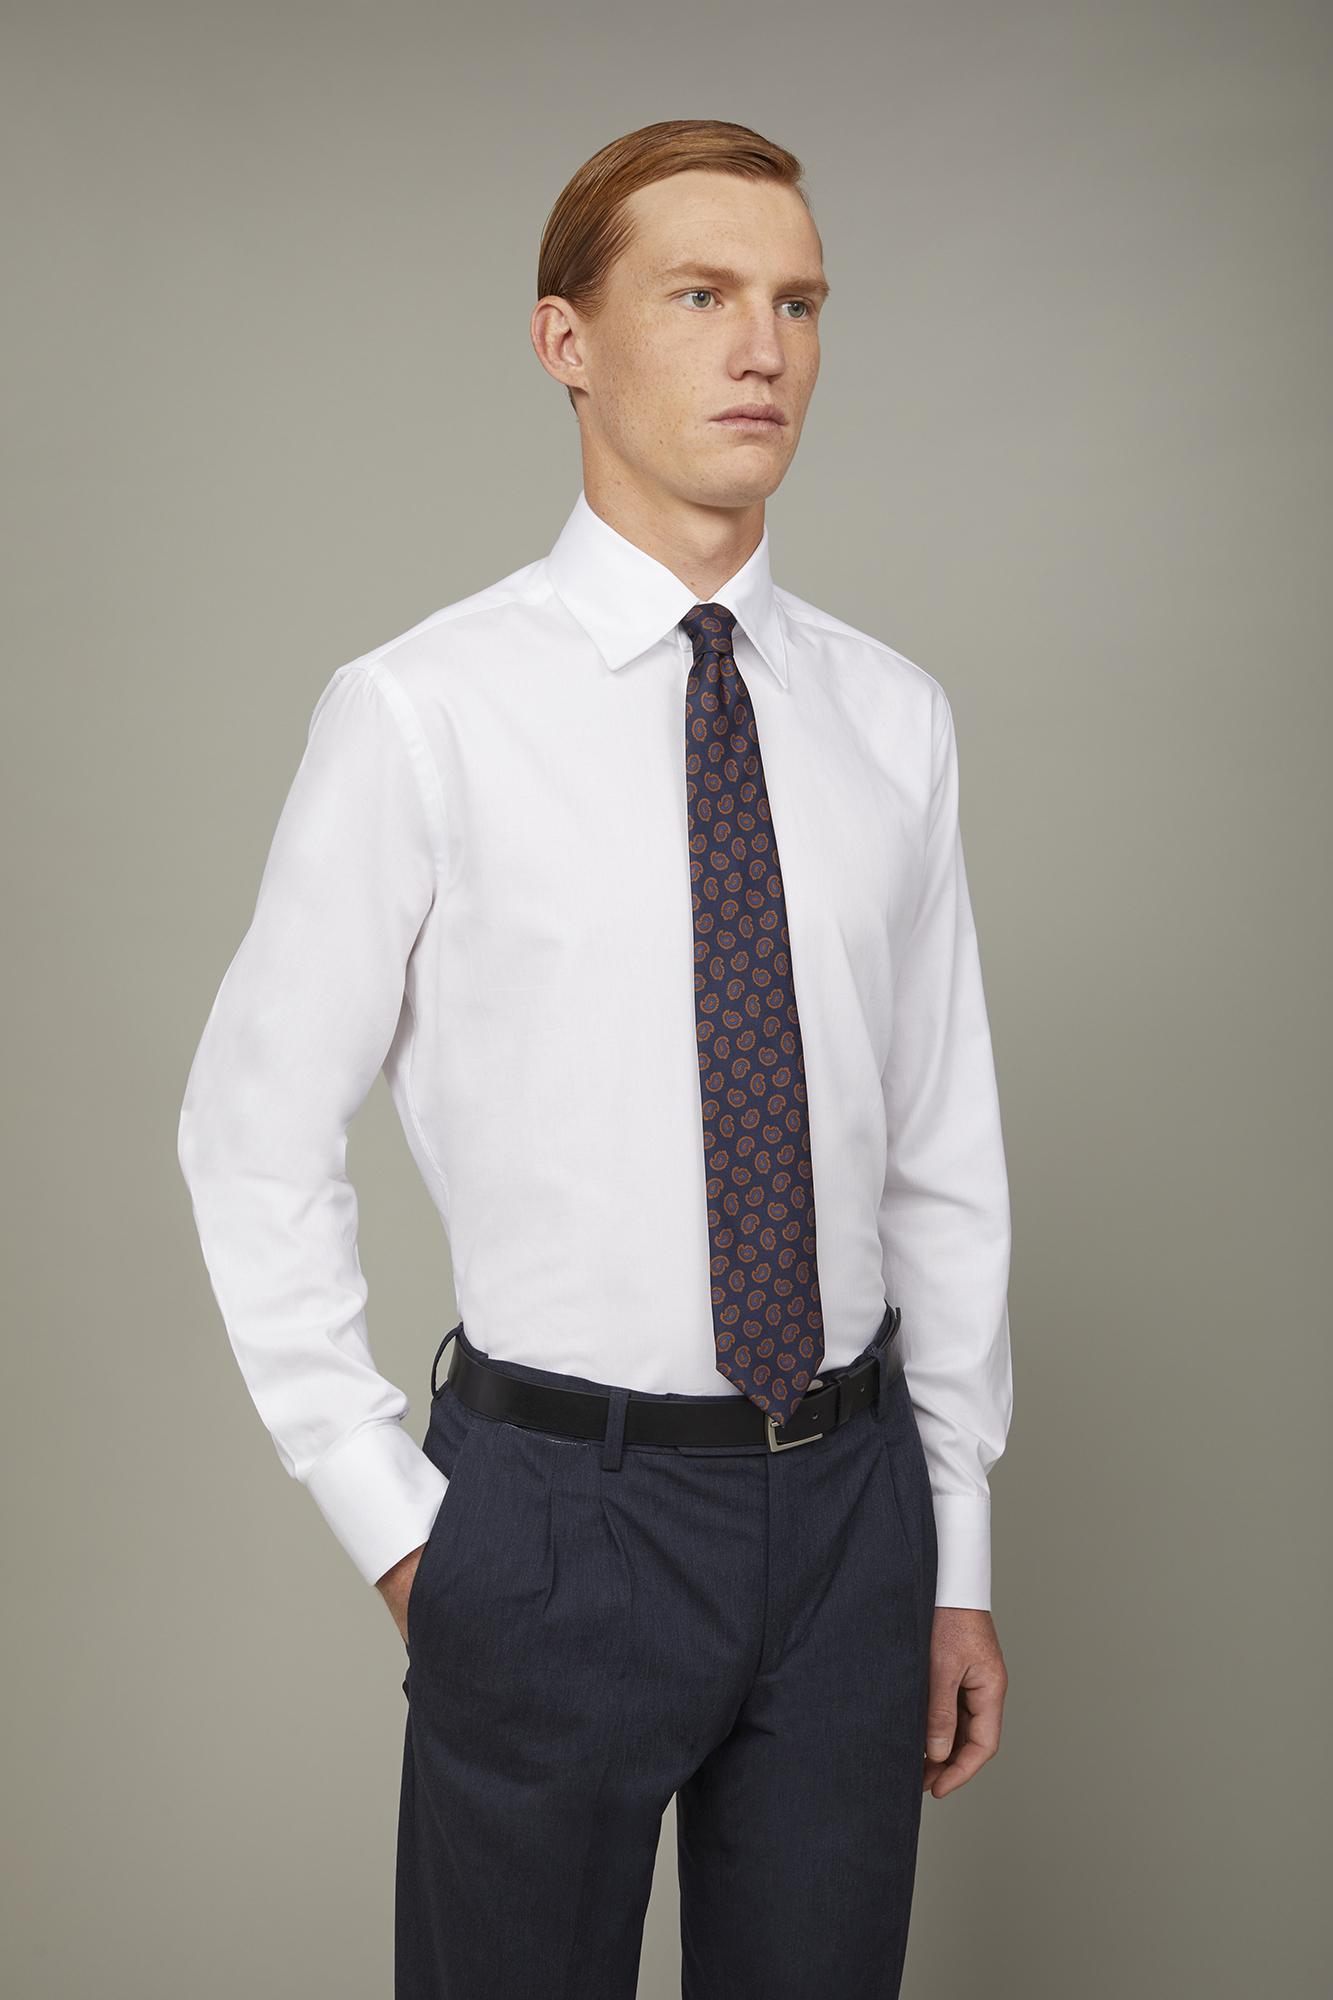 Men's shirt classic collar 100% cotton herringbone fabric plain regular fit image number null